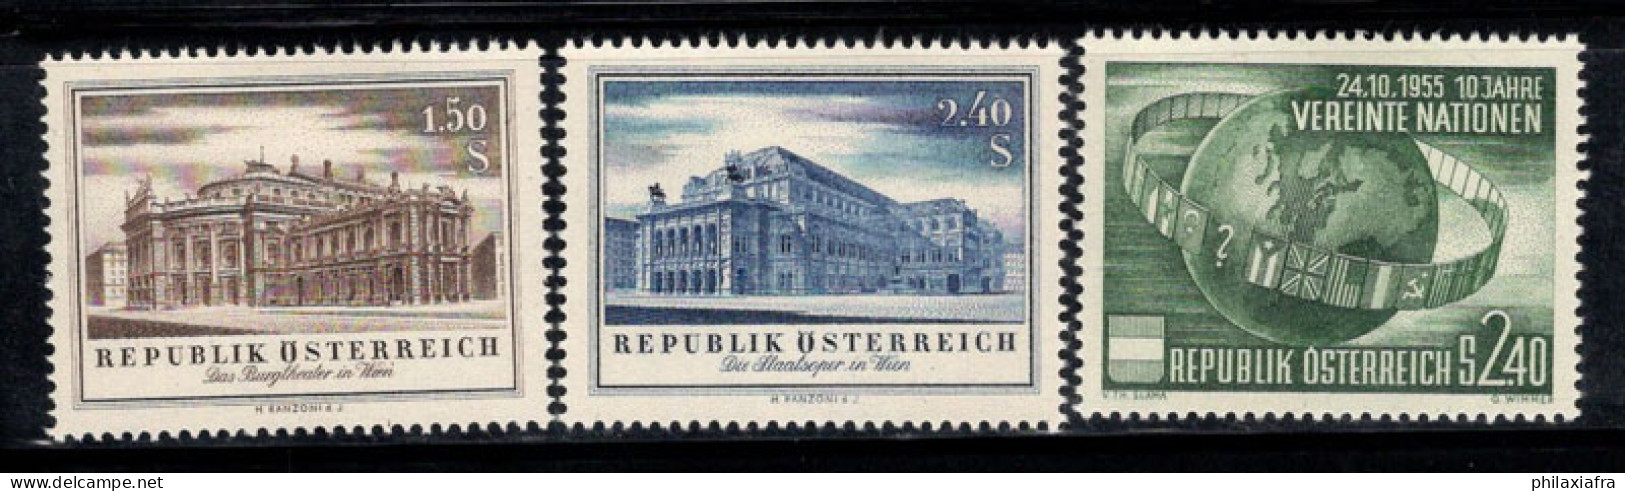 Autriche 1955 Mi. 1020-1022 Neuf * MH 100% ONU, THÉÂTRE, Opéra - Neufs